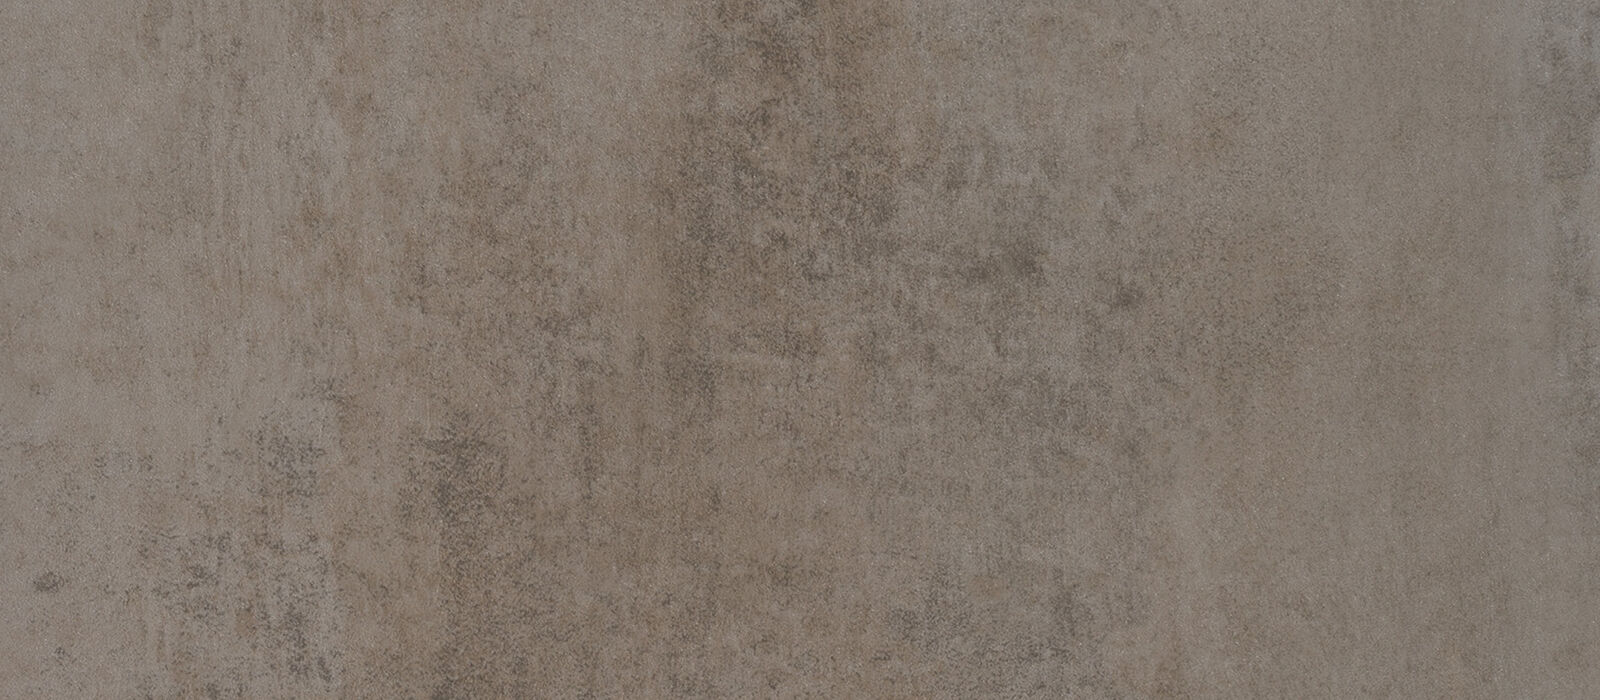 str. Oxid light concrete       0,40 1420